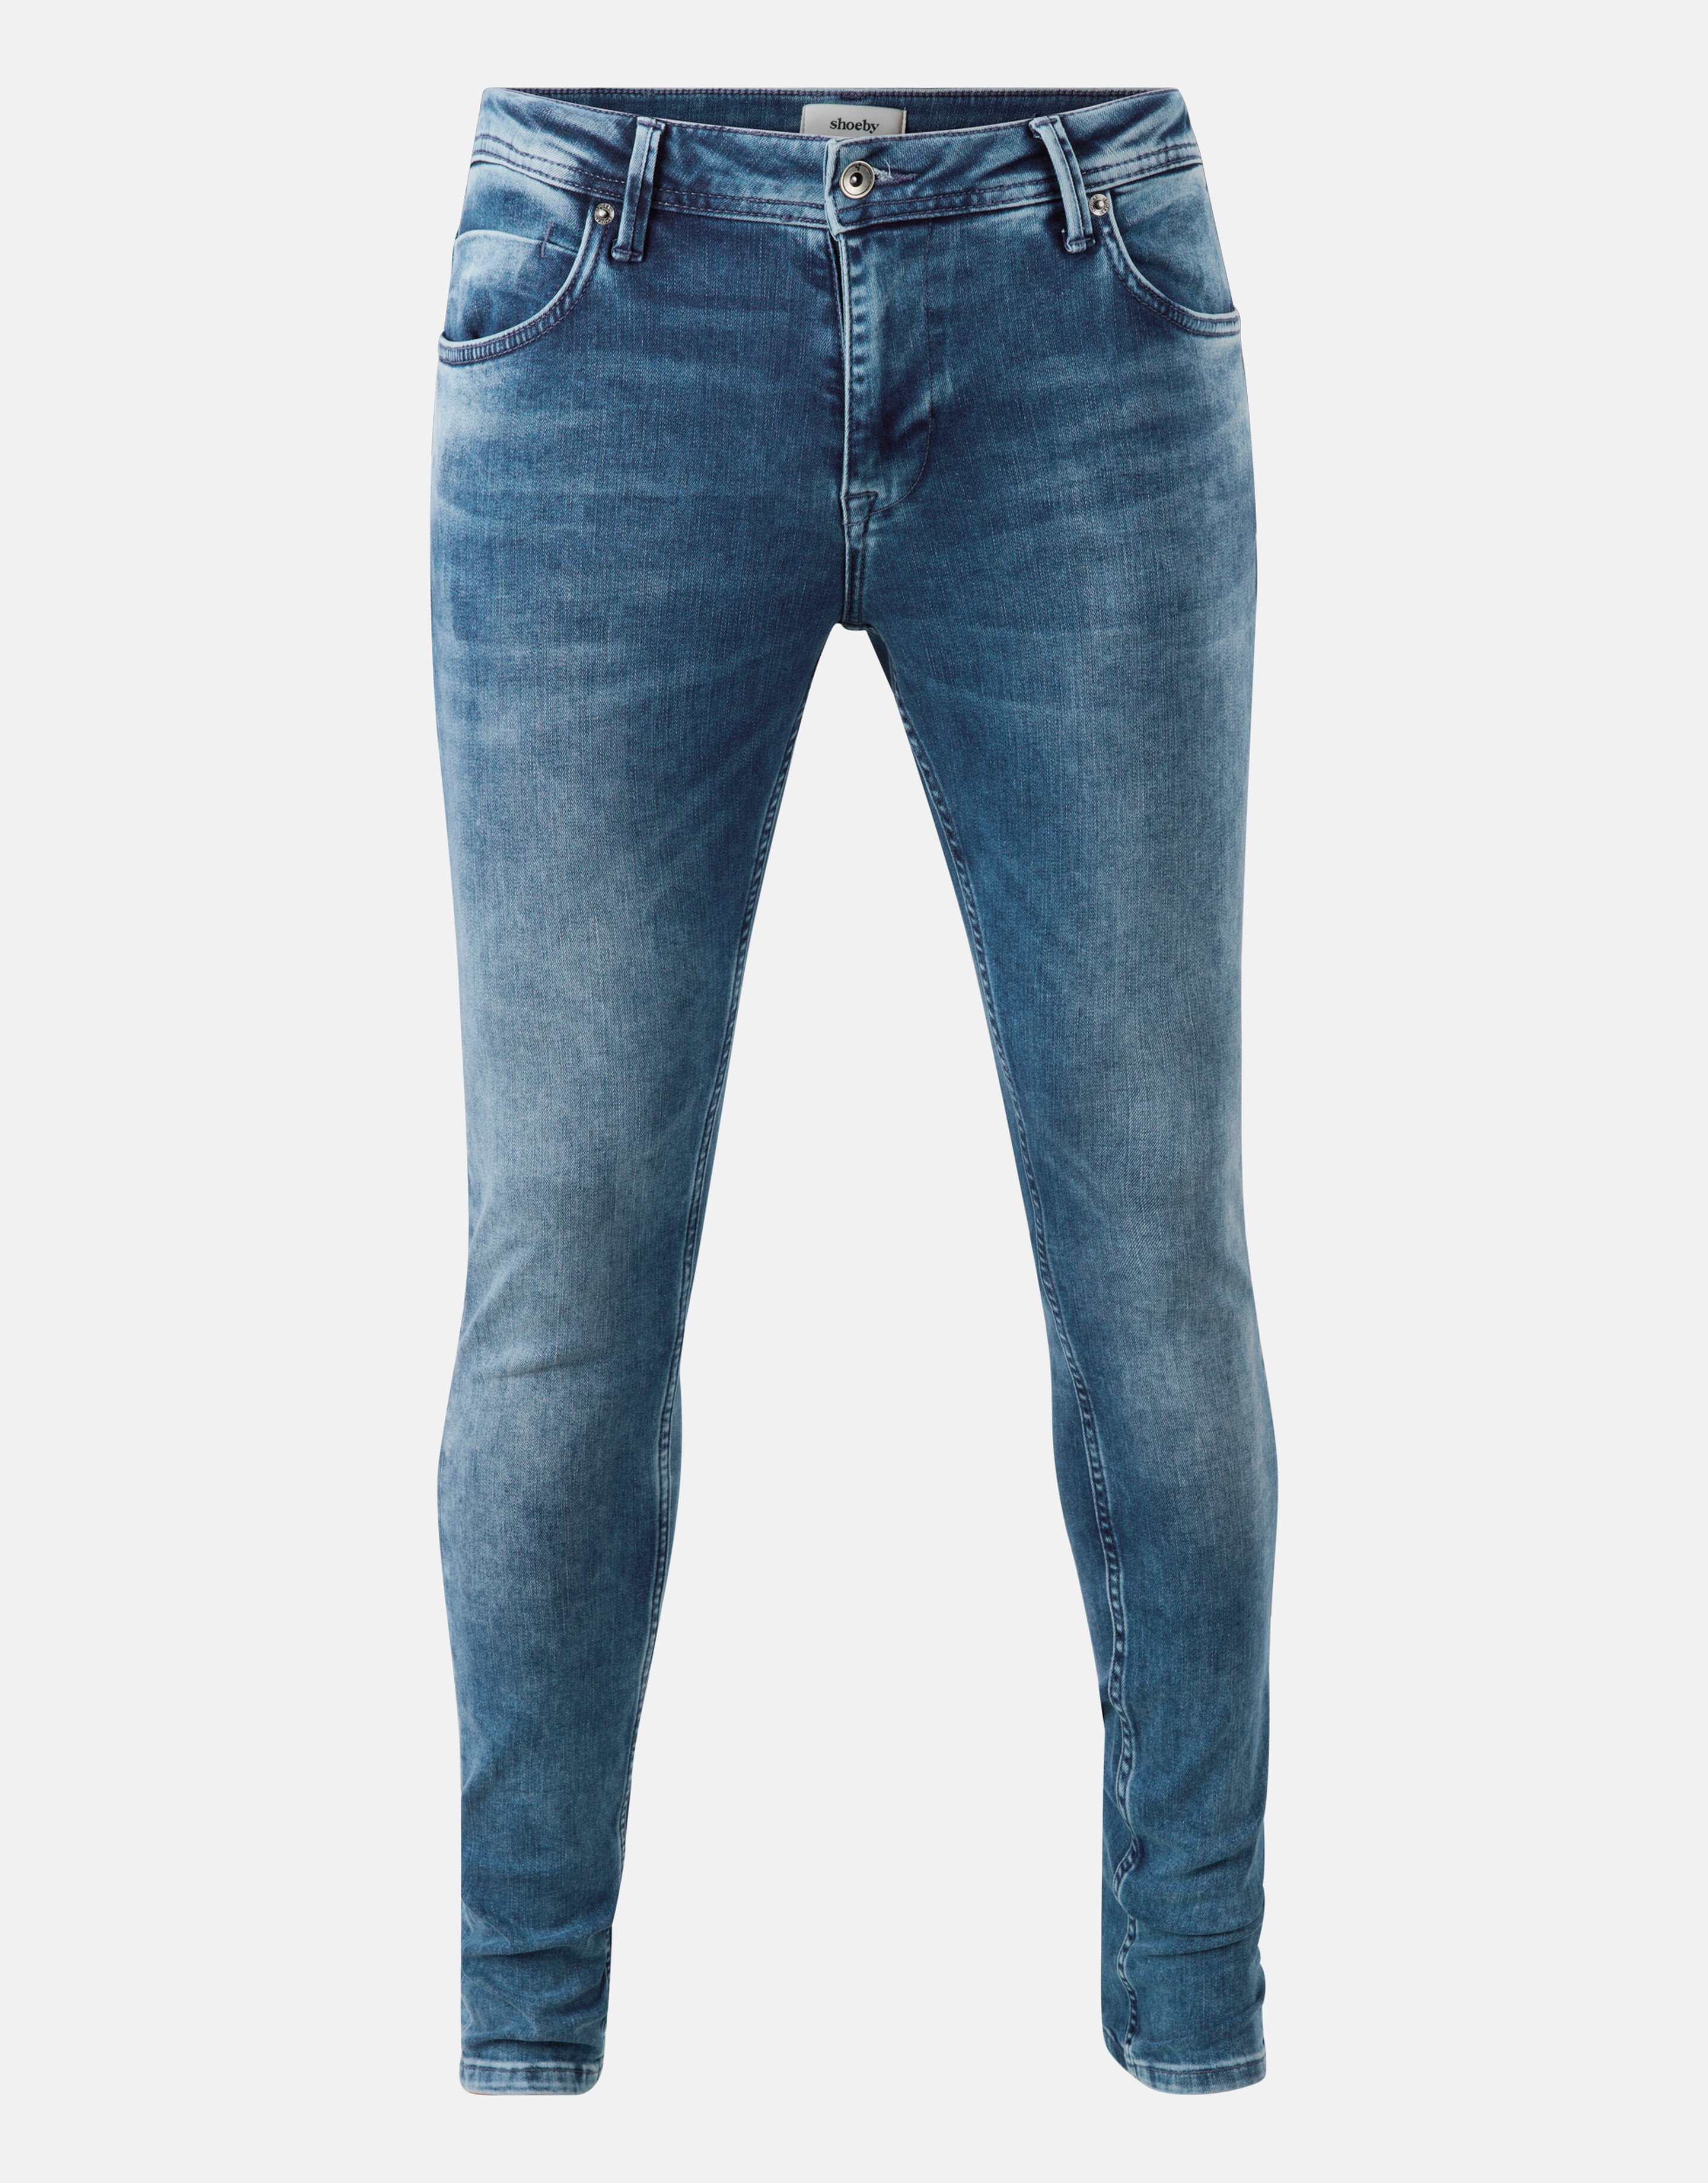 Leroy Skinny Jeans Jack Mediumstone L34 Refill